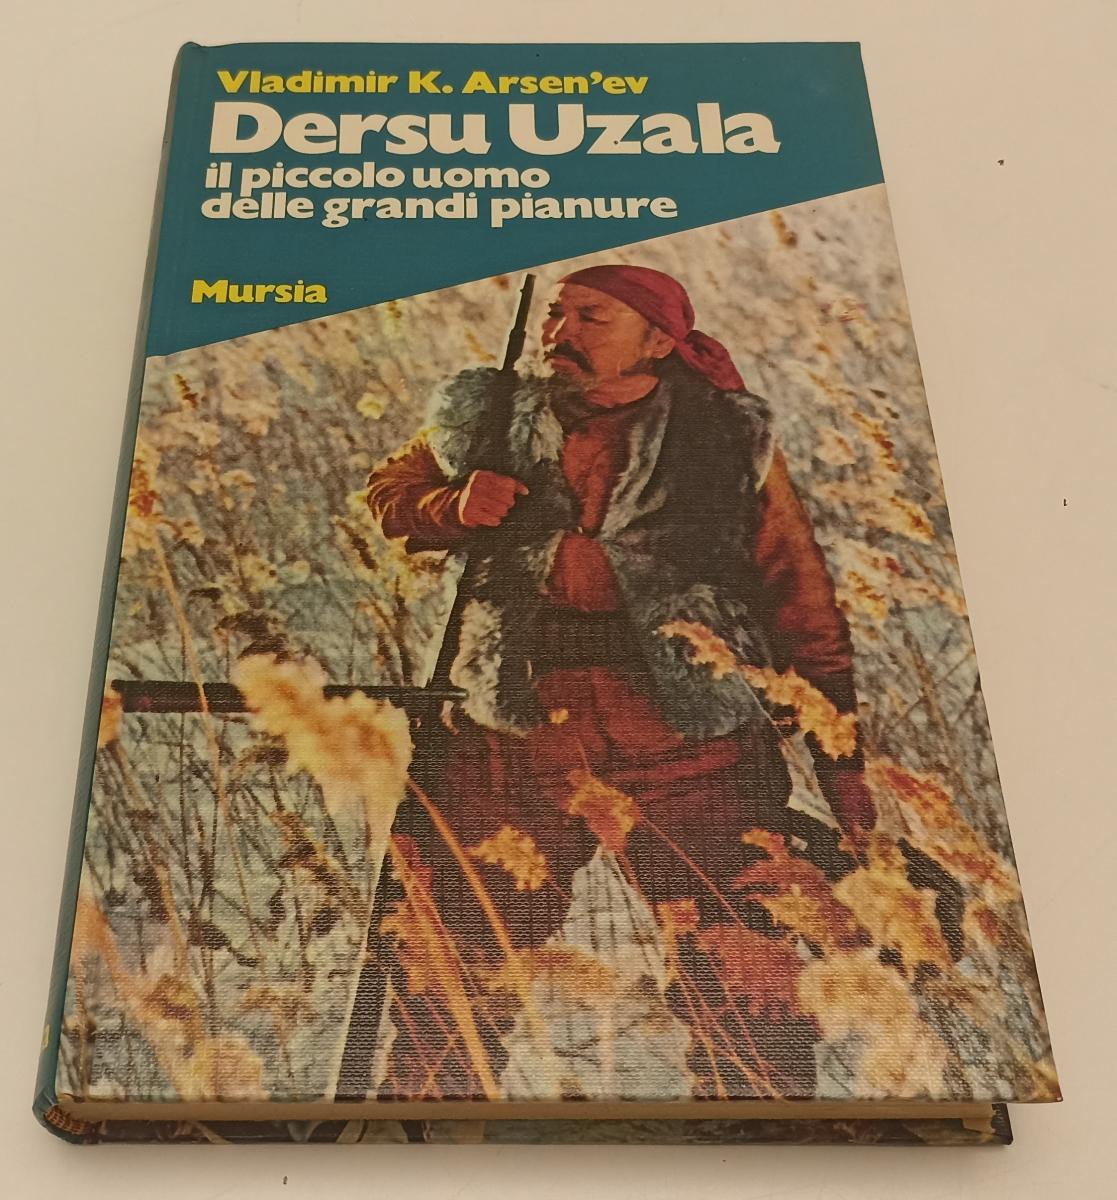 LB- DERSU UZALA - VLADIMIR K. ARSEN'EV - MURSIA --- 1977 - C - XFS19